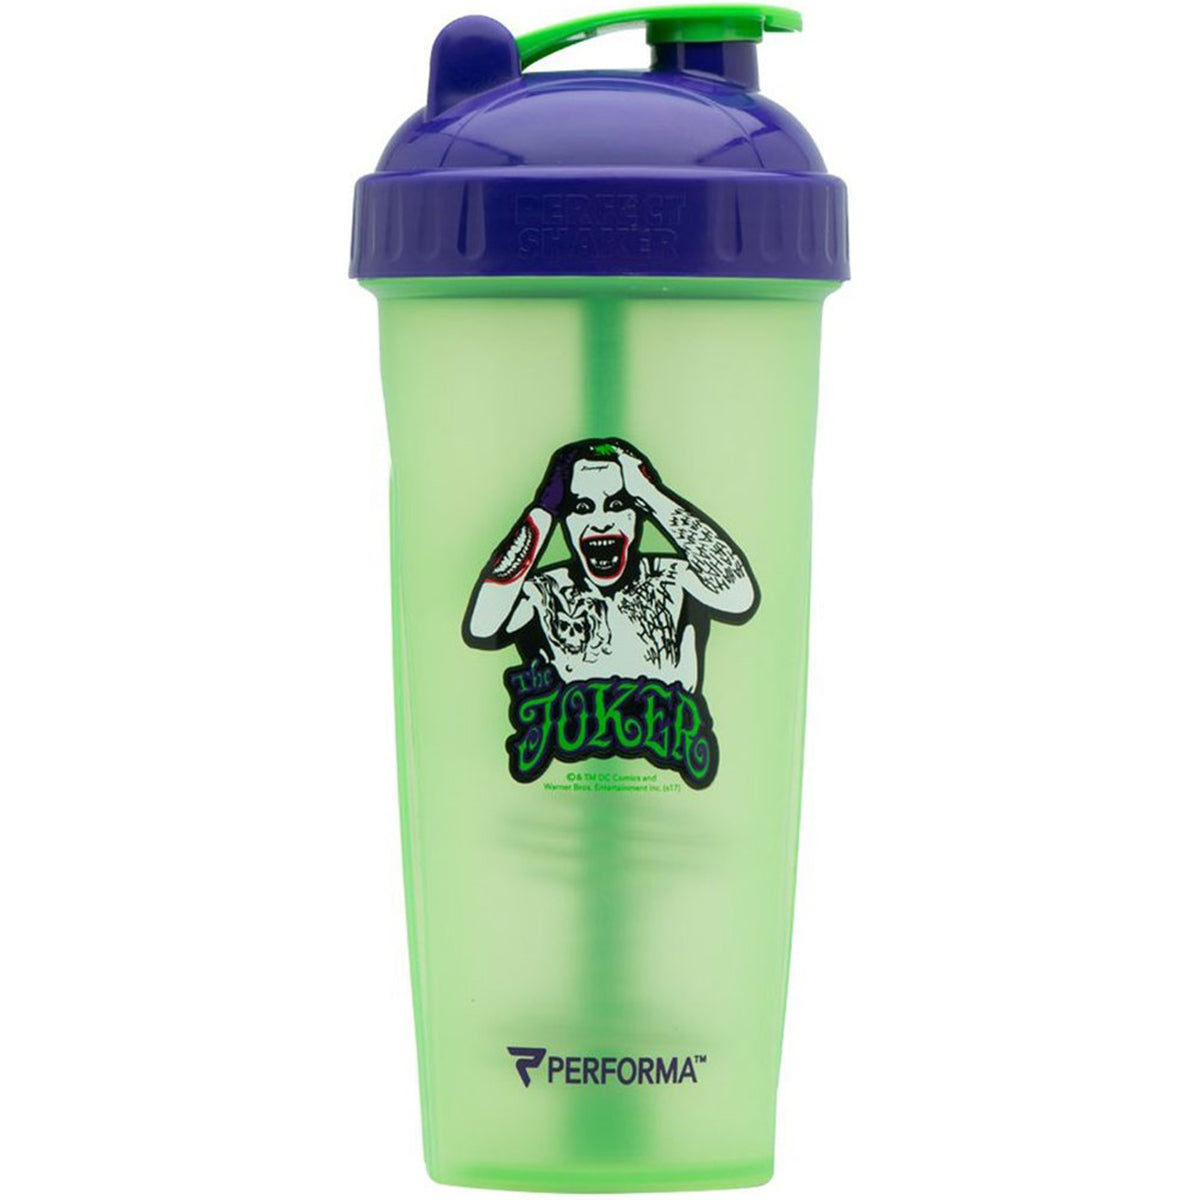 Performa PerfectShaker 28 oz. Villain Shaker Cup Bottle - The Joker - Green PerfectShaker